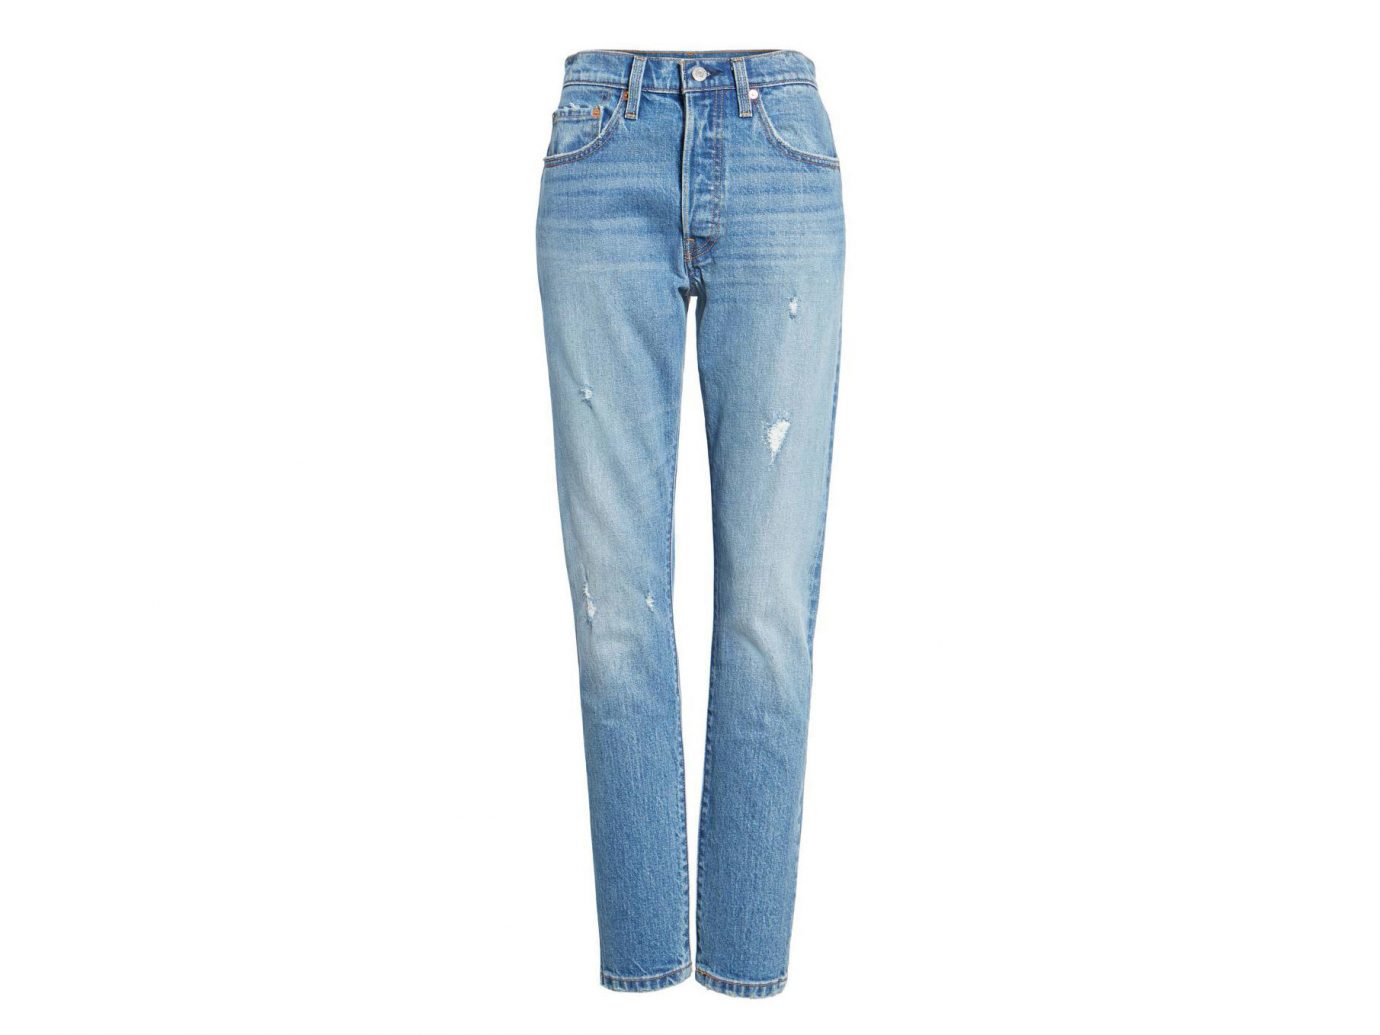 Celebs Style + Design Travel Shop clothing trouser jeans denim pocket trousers waist electric blue blue colored